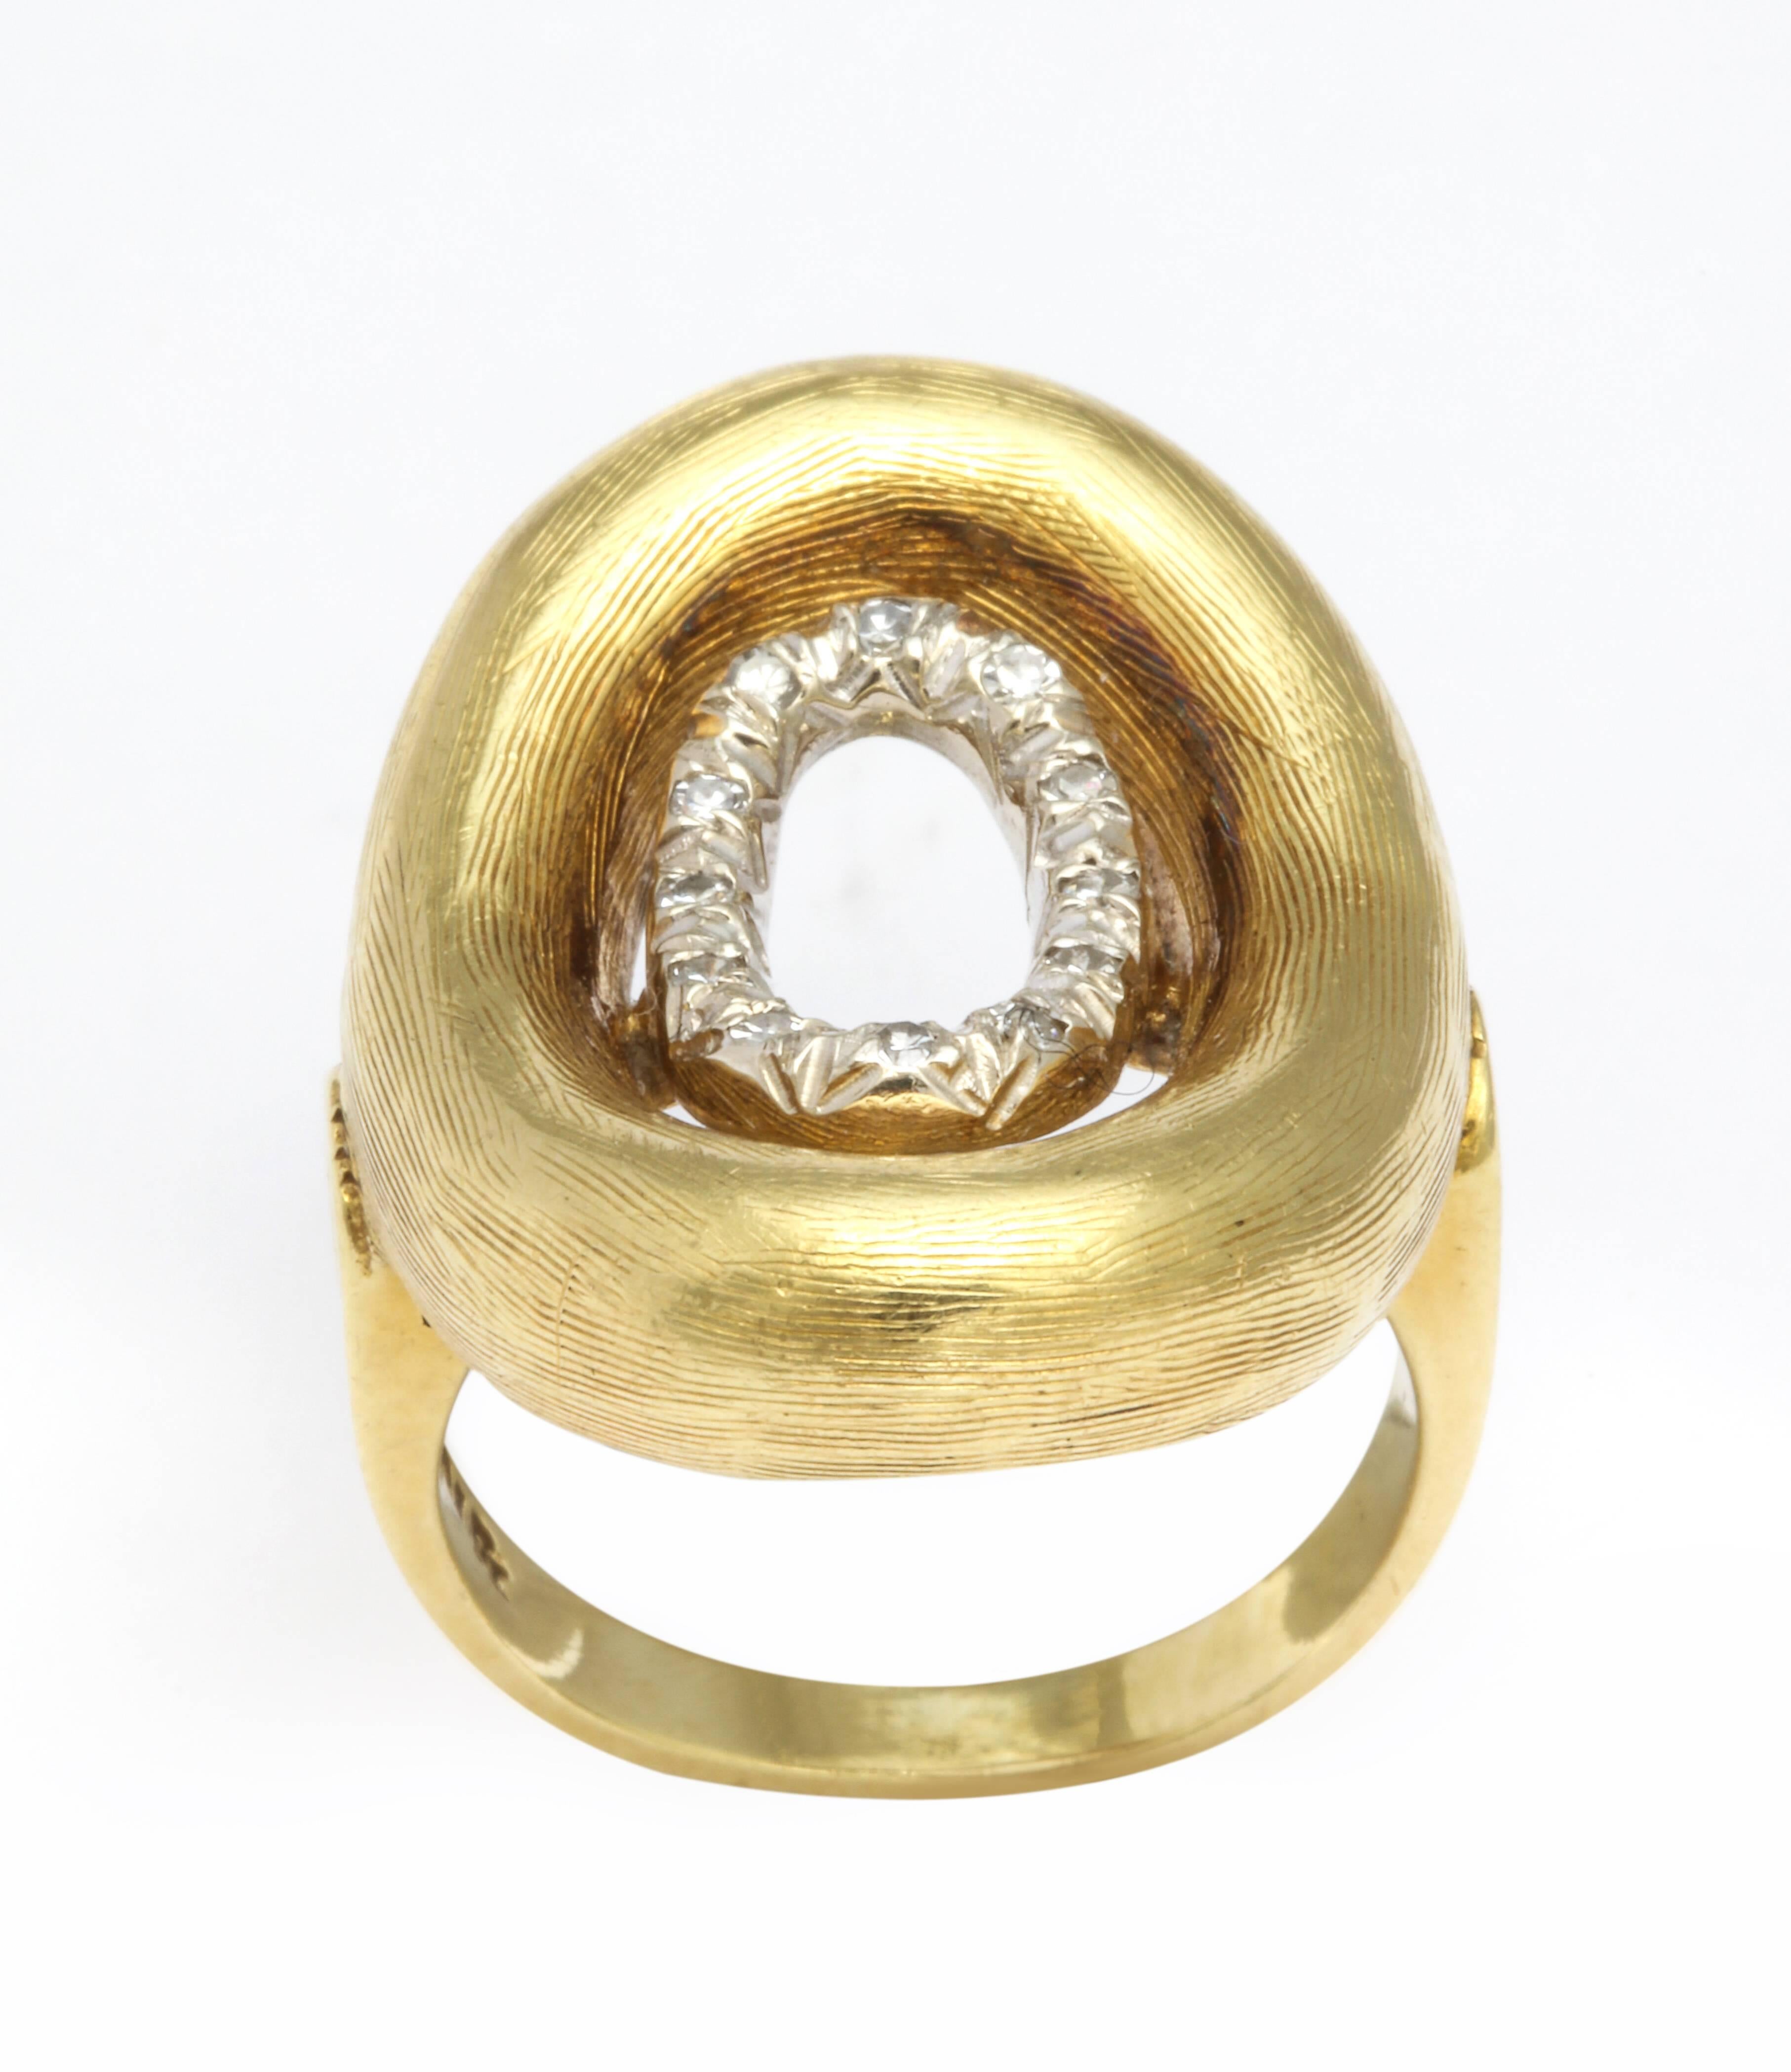 Women's Modernist Design Gold and Diamond Ring